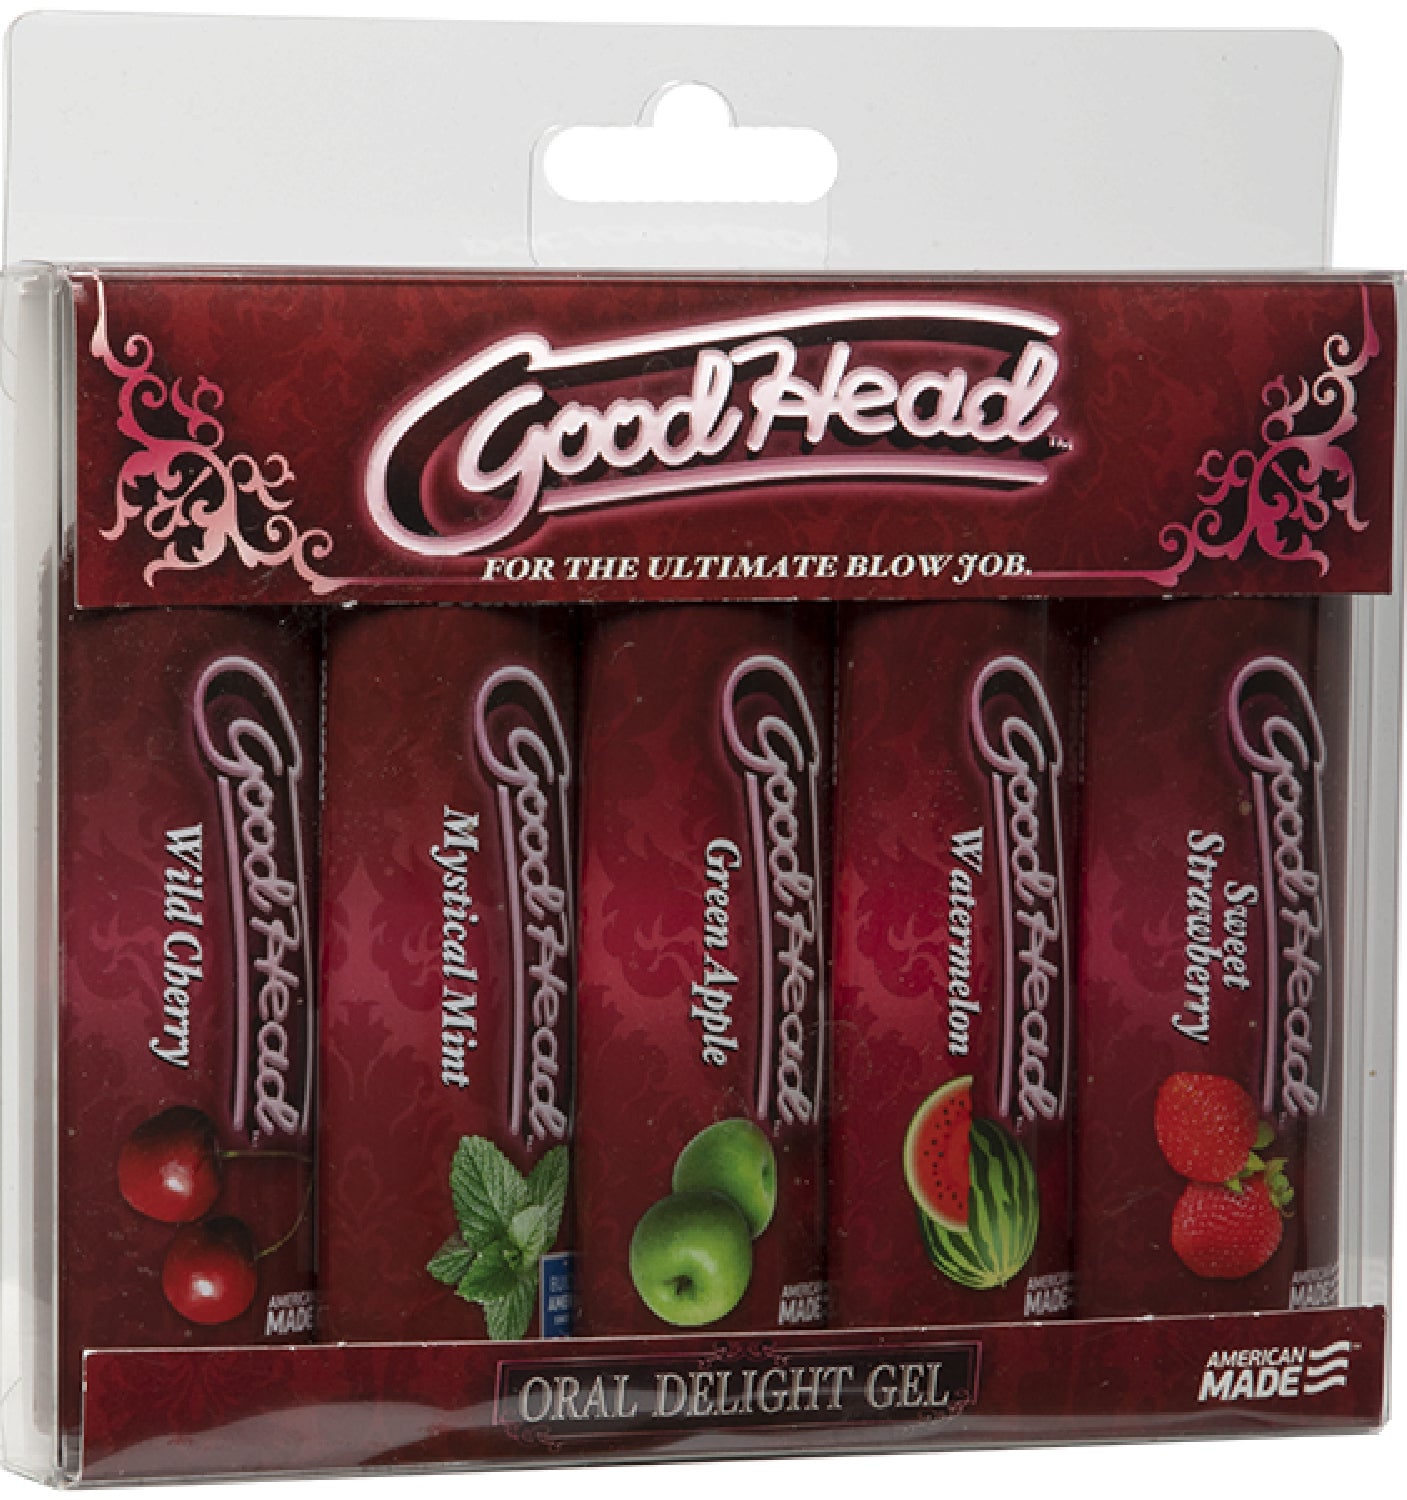 Goodhead - Oral Delight Gel - Multi 5-Pack